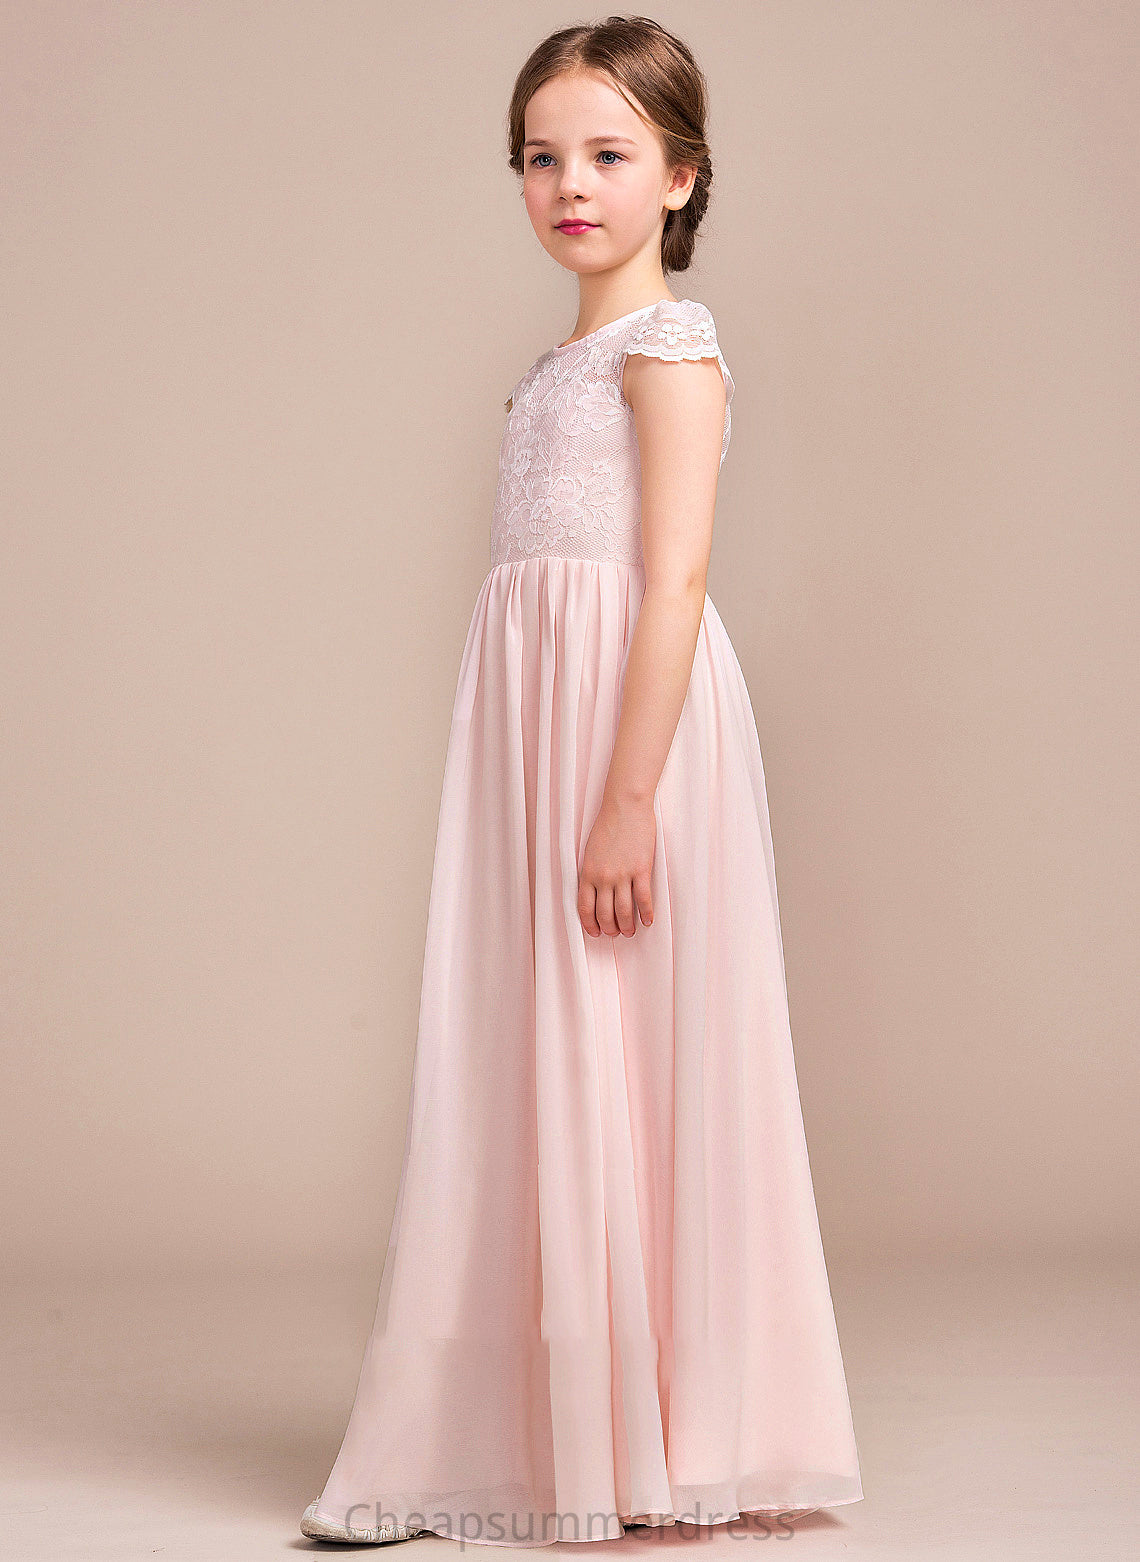 Desiree Junior Bridesmaid Dresses A-LineScoopNeckFloor-LengthChiffonLaceJuniorBridesmaidDress#81155